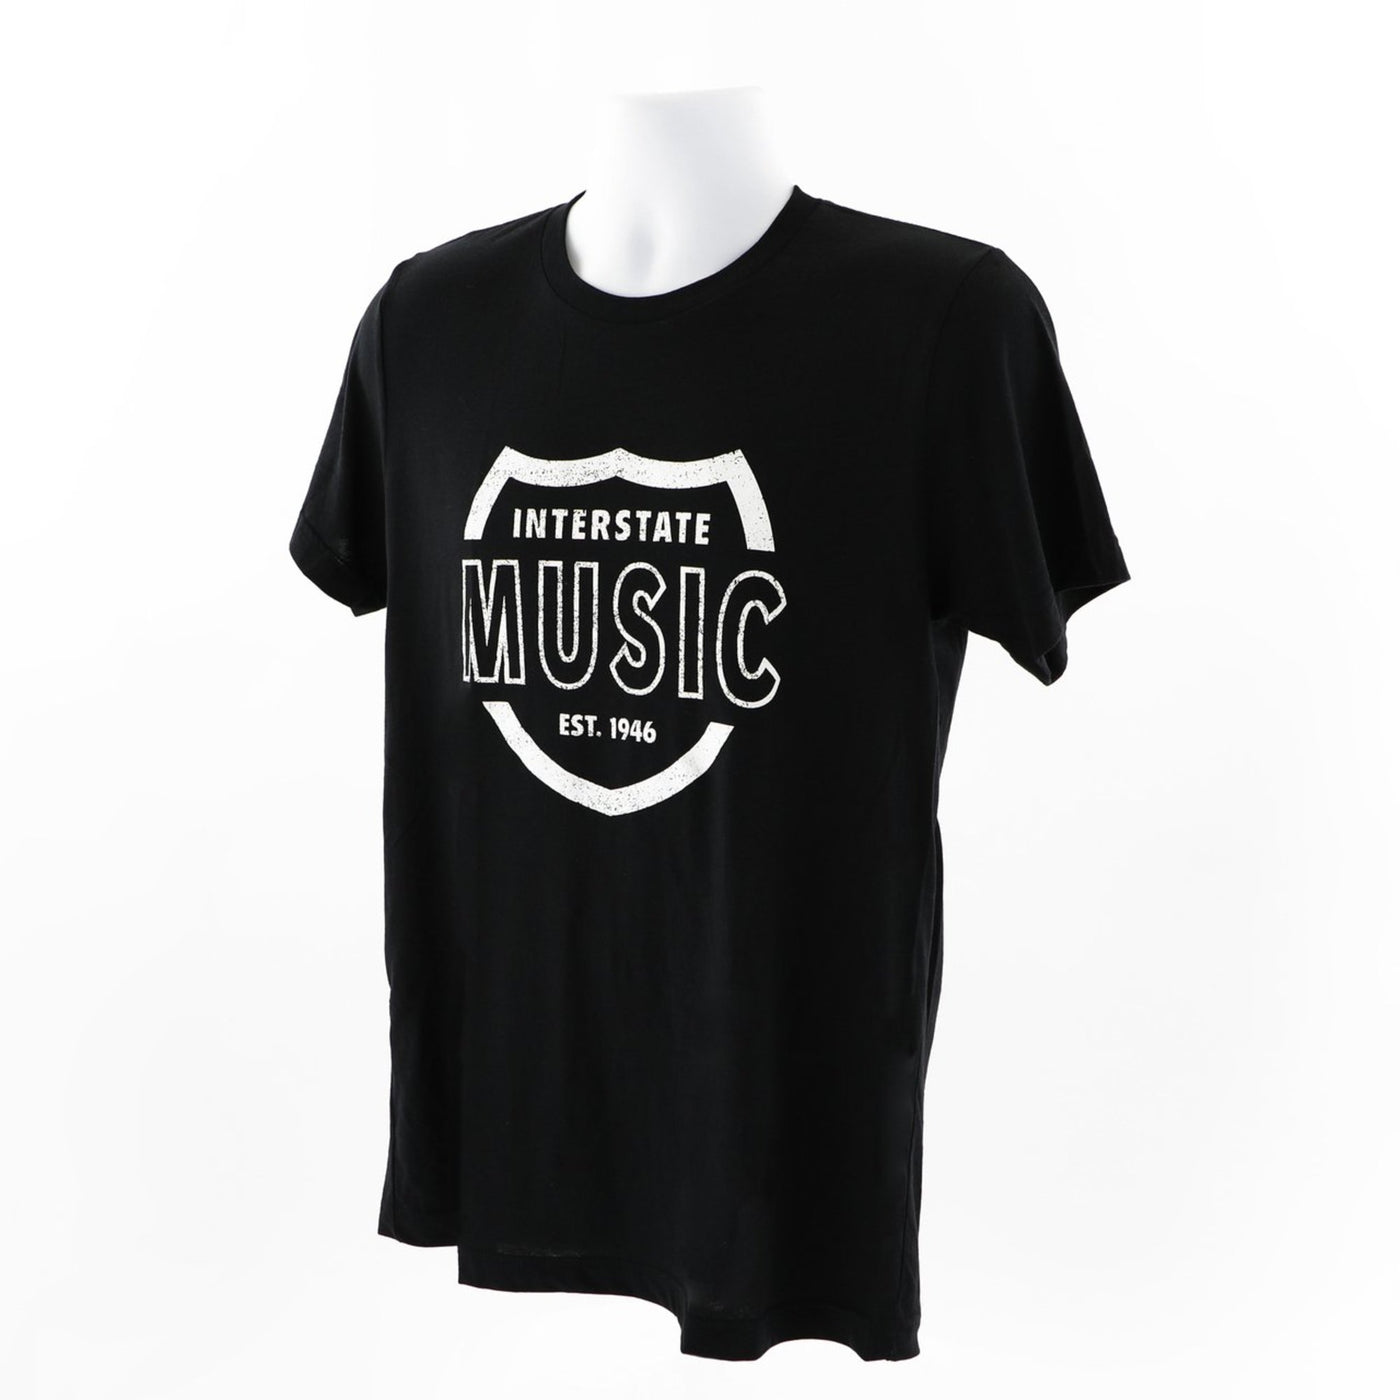 Interstate Music Short Sleeve T-Shirt - Unisex, Black, Medium